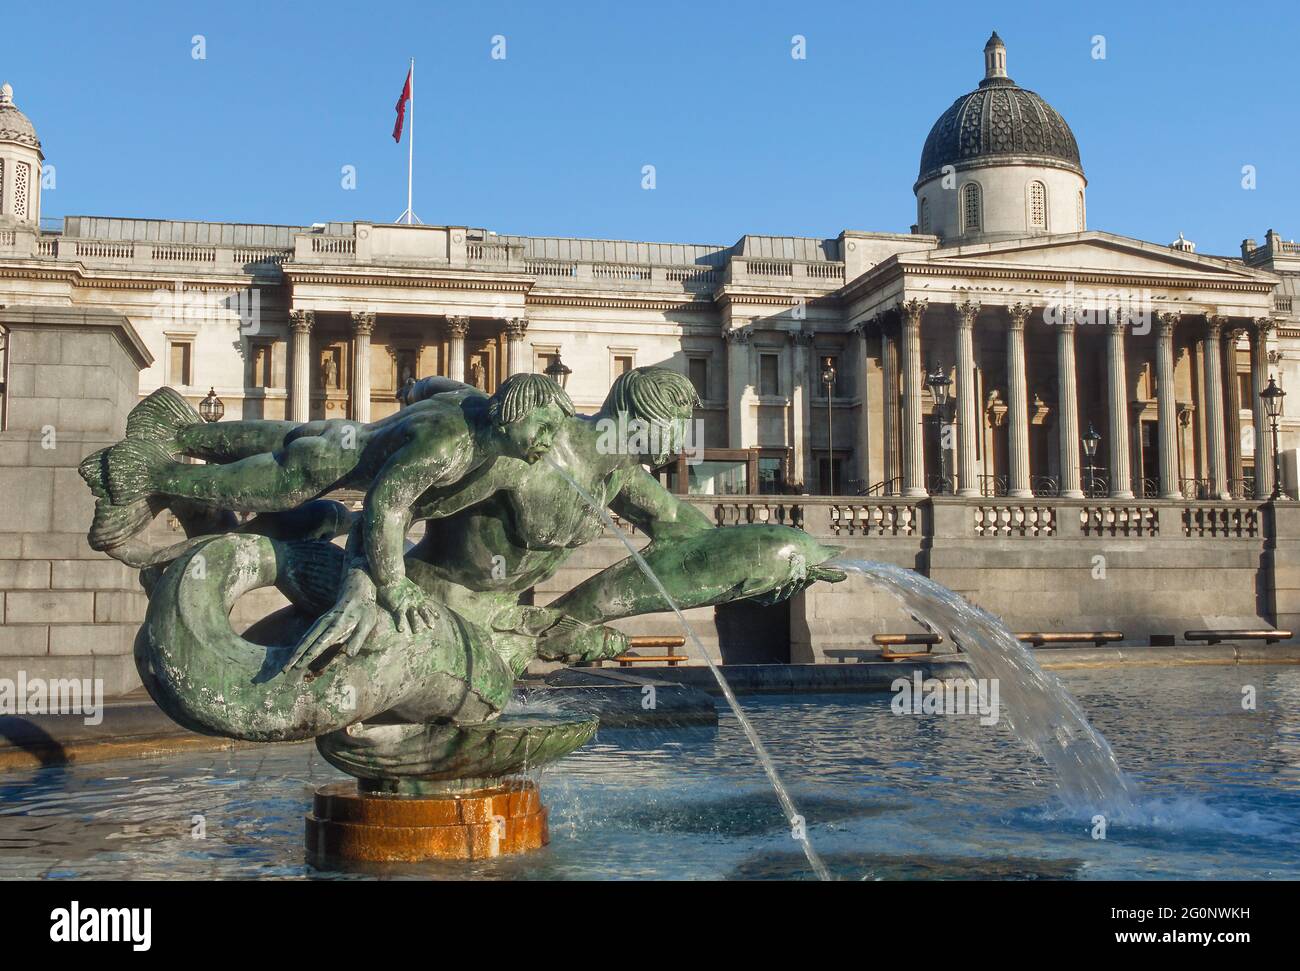 Mermaids and dophin fountain Trafalgar Square London Stock Photo - Alamy